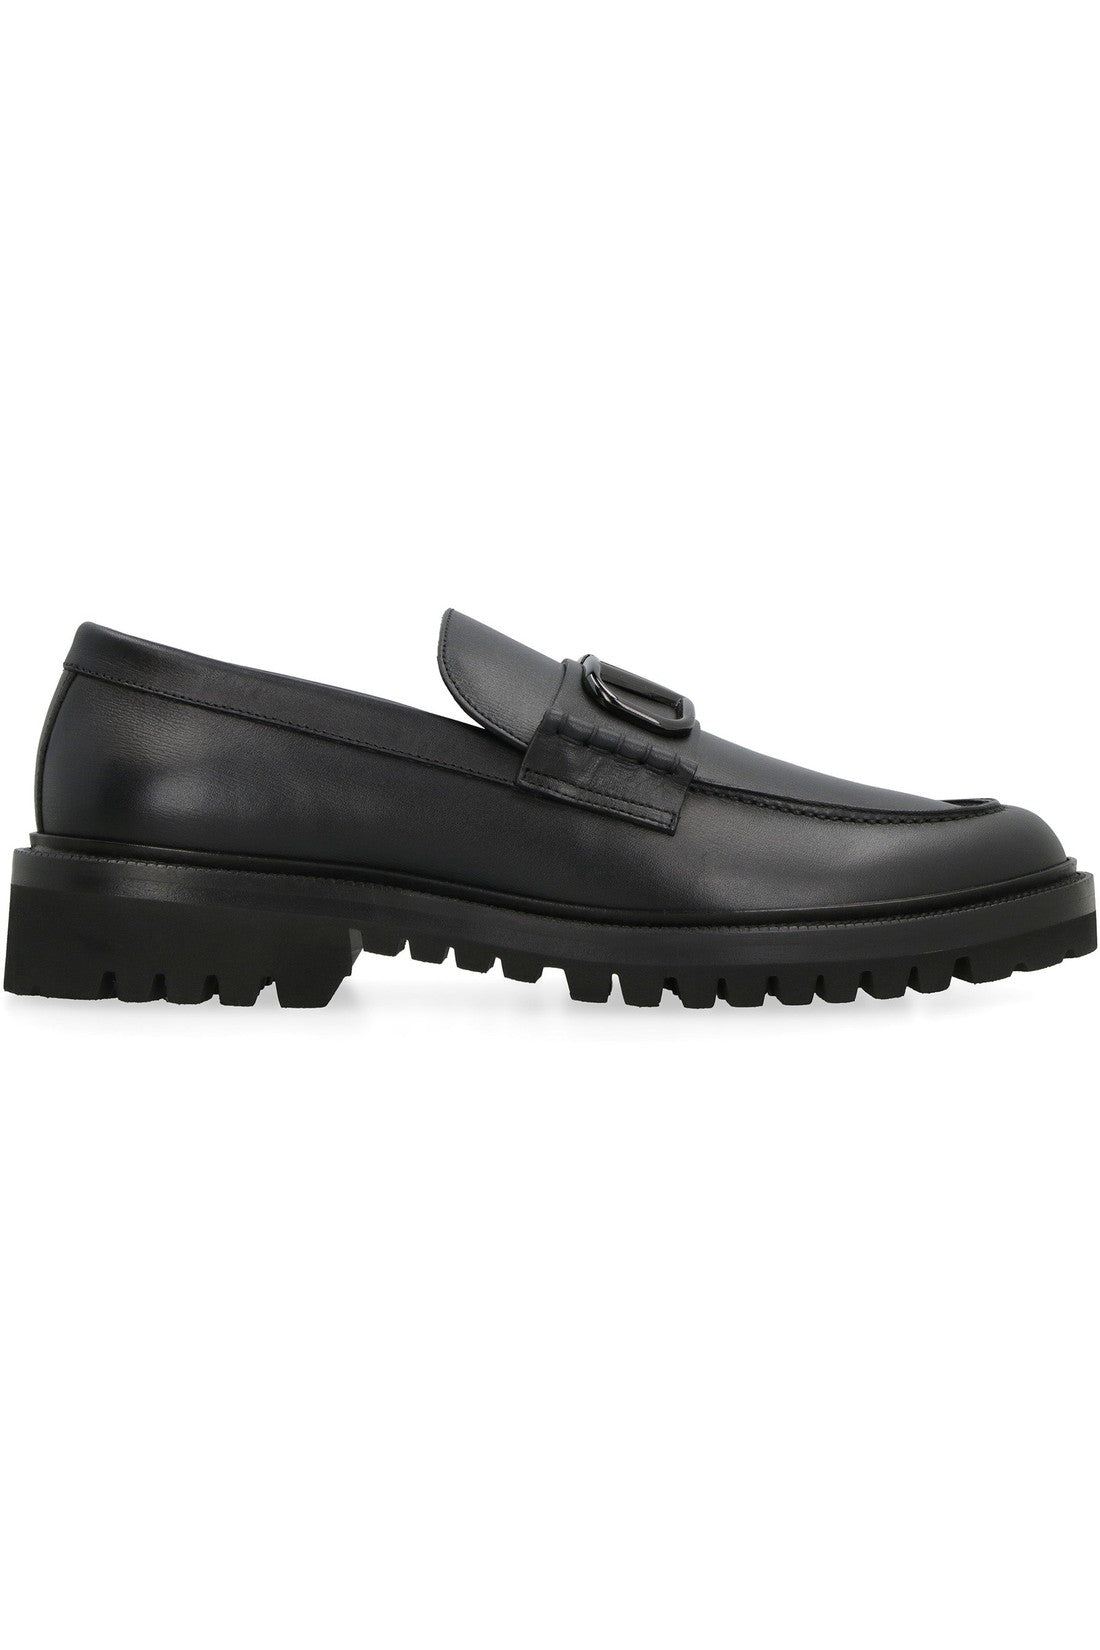 Valentino-OUTLET-SALE-Valentino Garavani - VLogo Signature leather loafers-ARCHIVIST